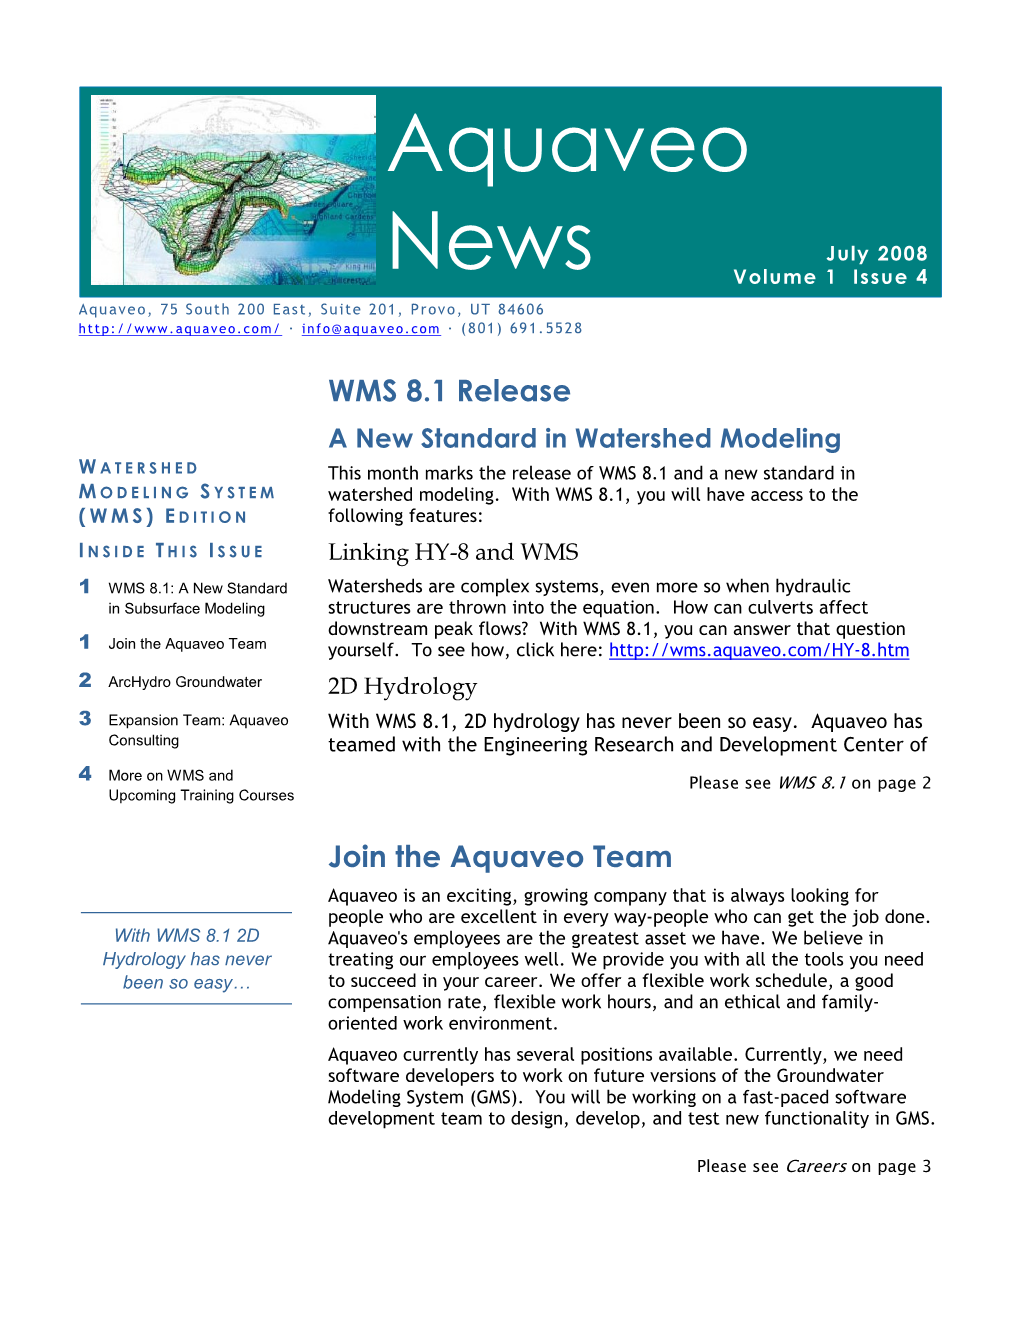 Aquaveo News